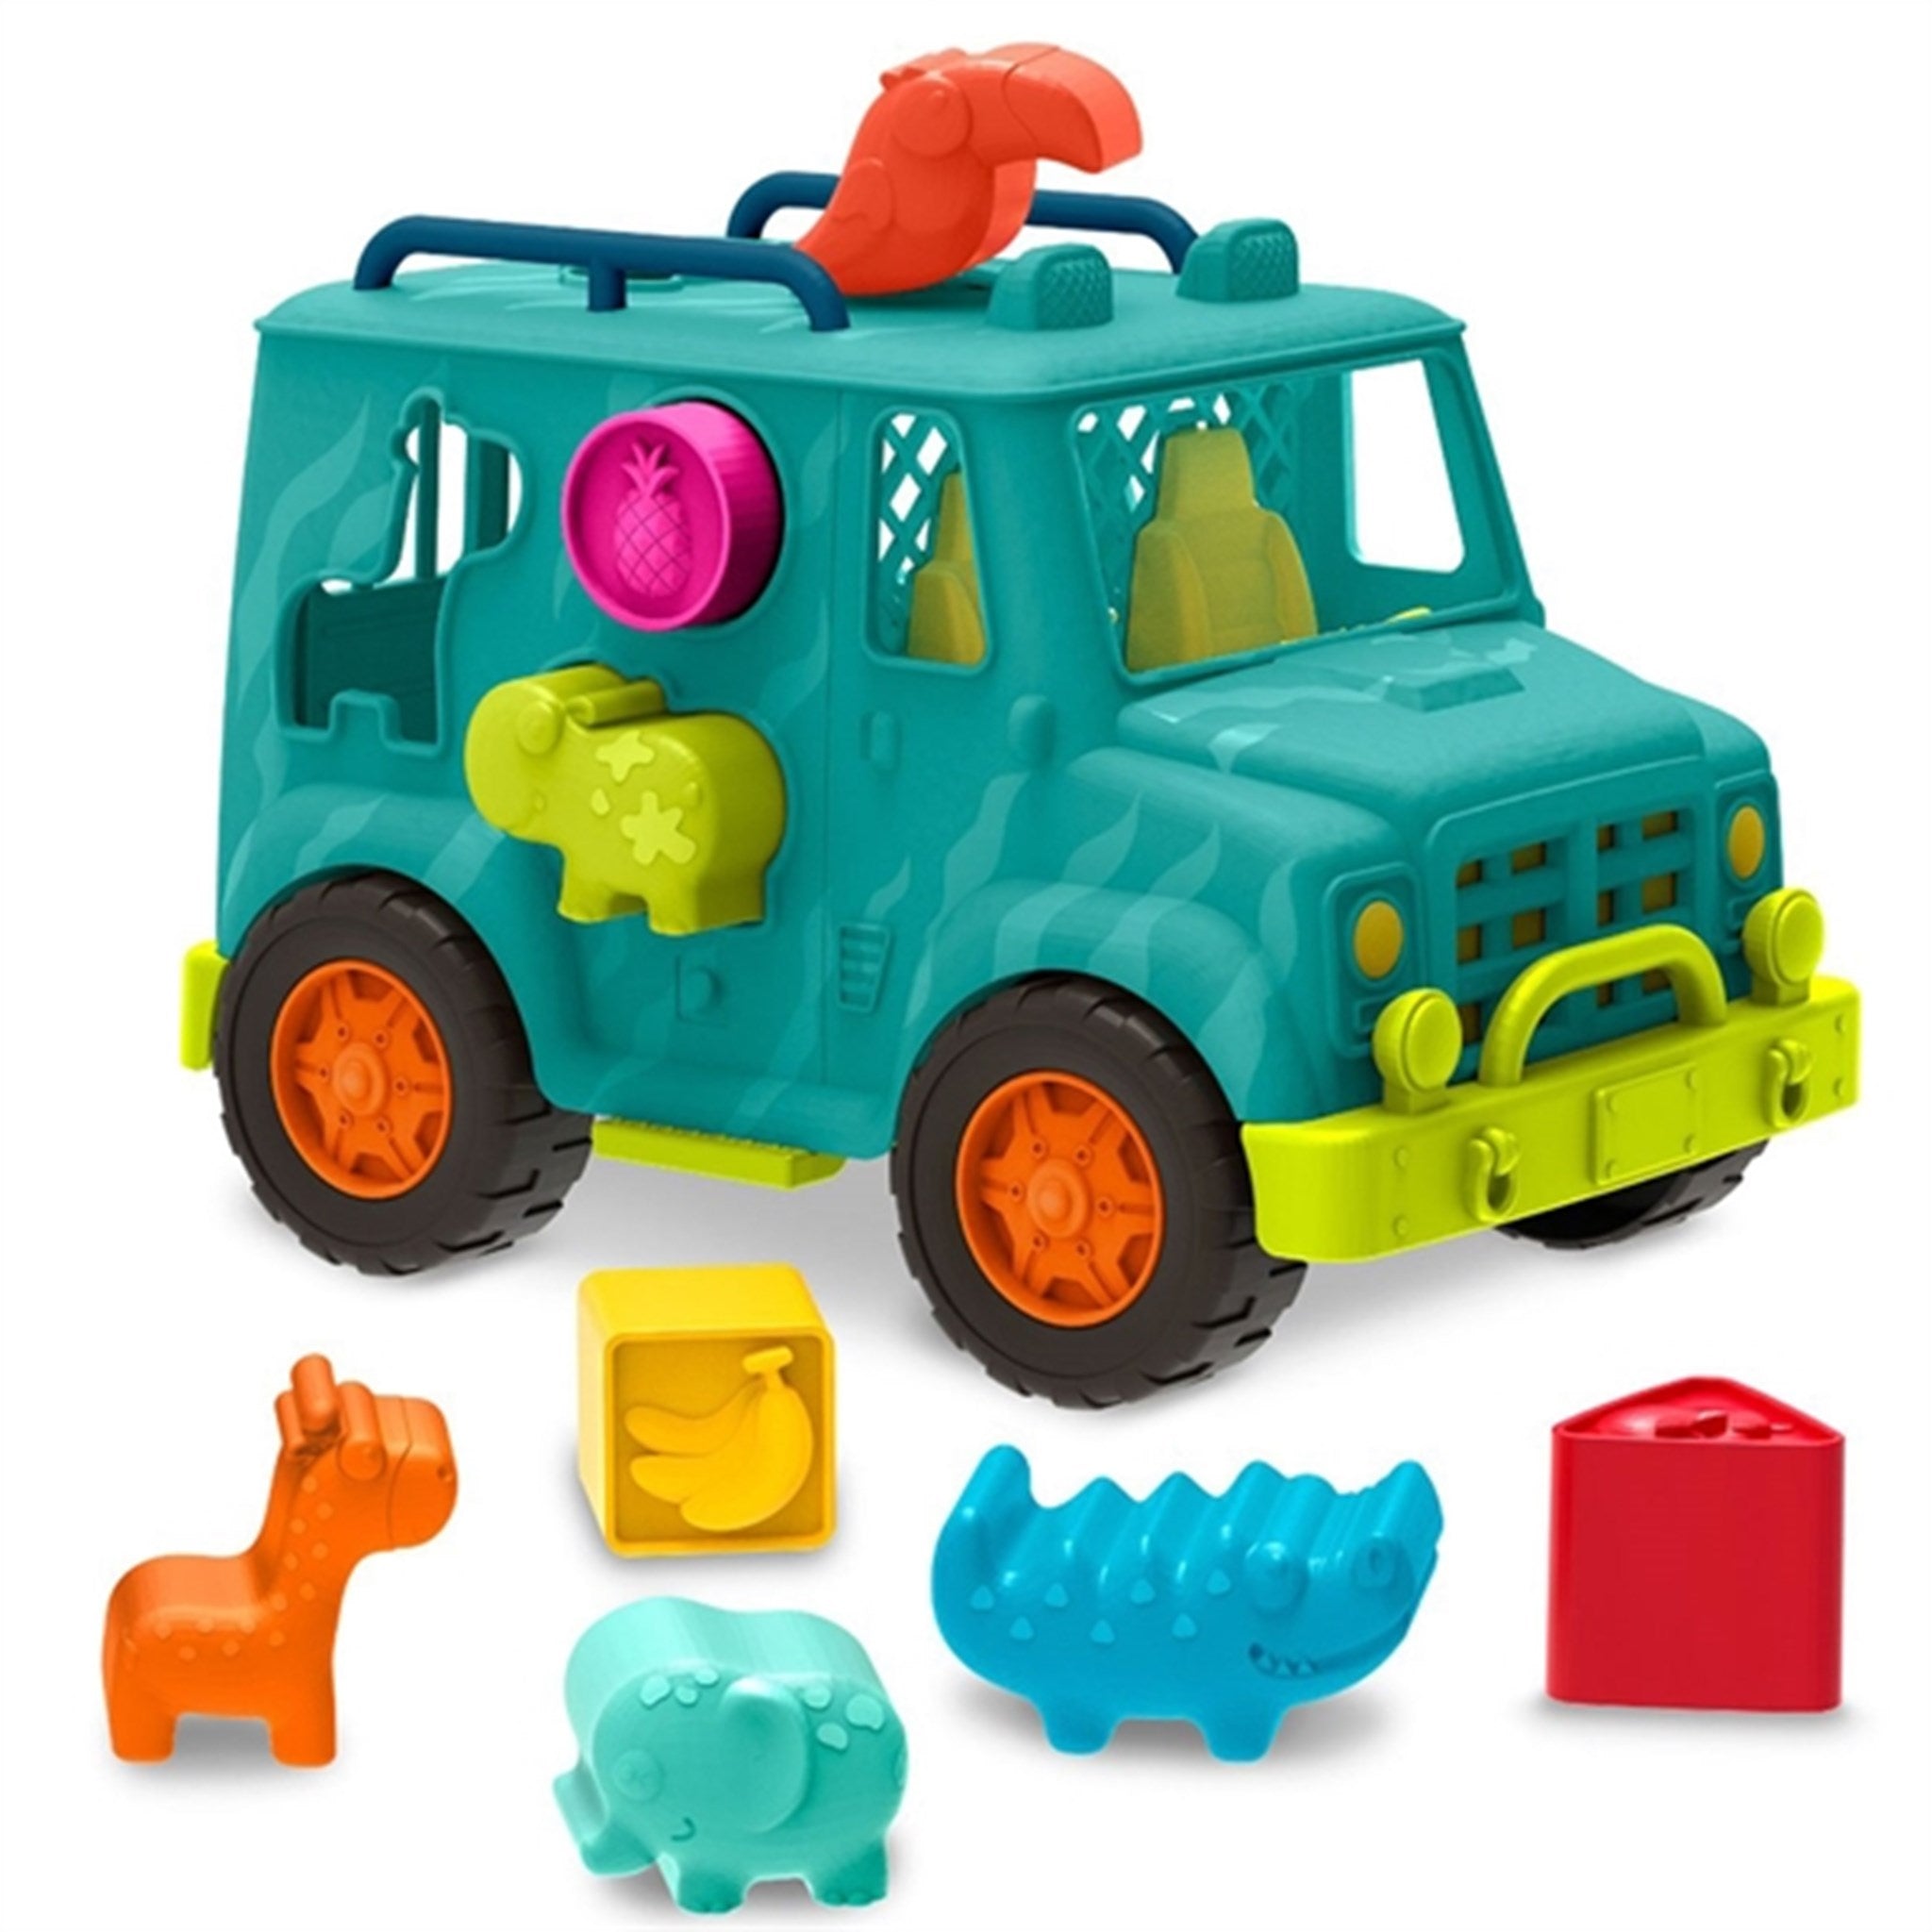 B-toys Happy Cruisers Shape Sorter Truck